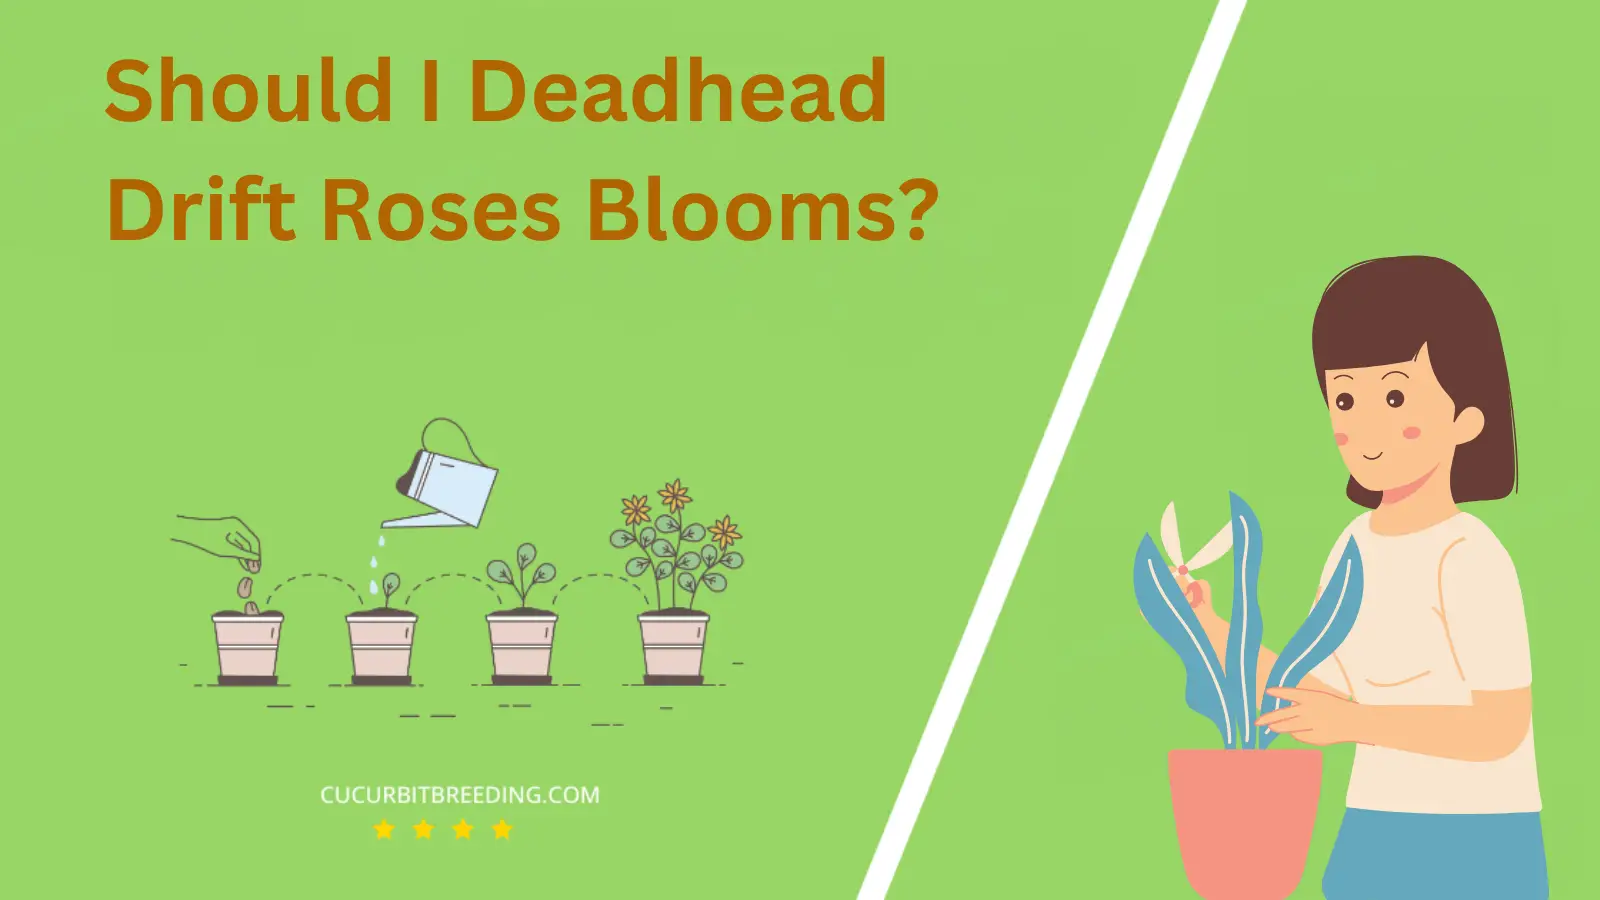 Should I Deadhead Drift Roses Blooms?